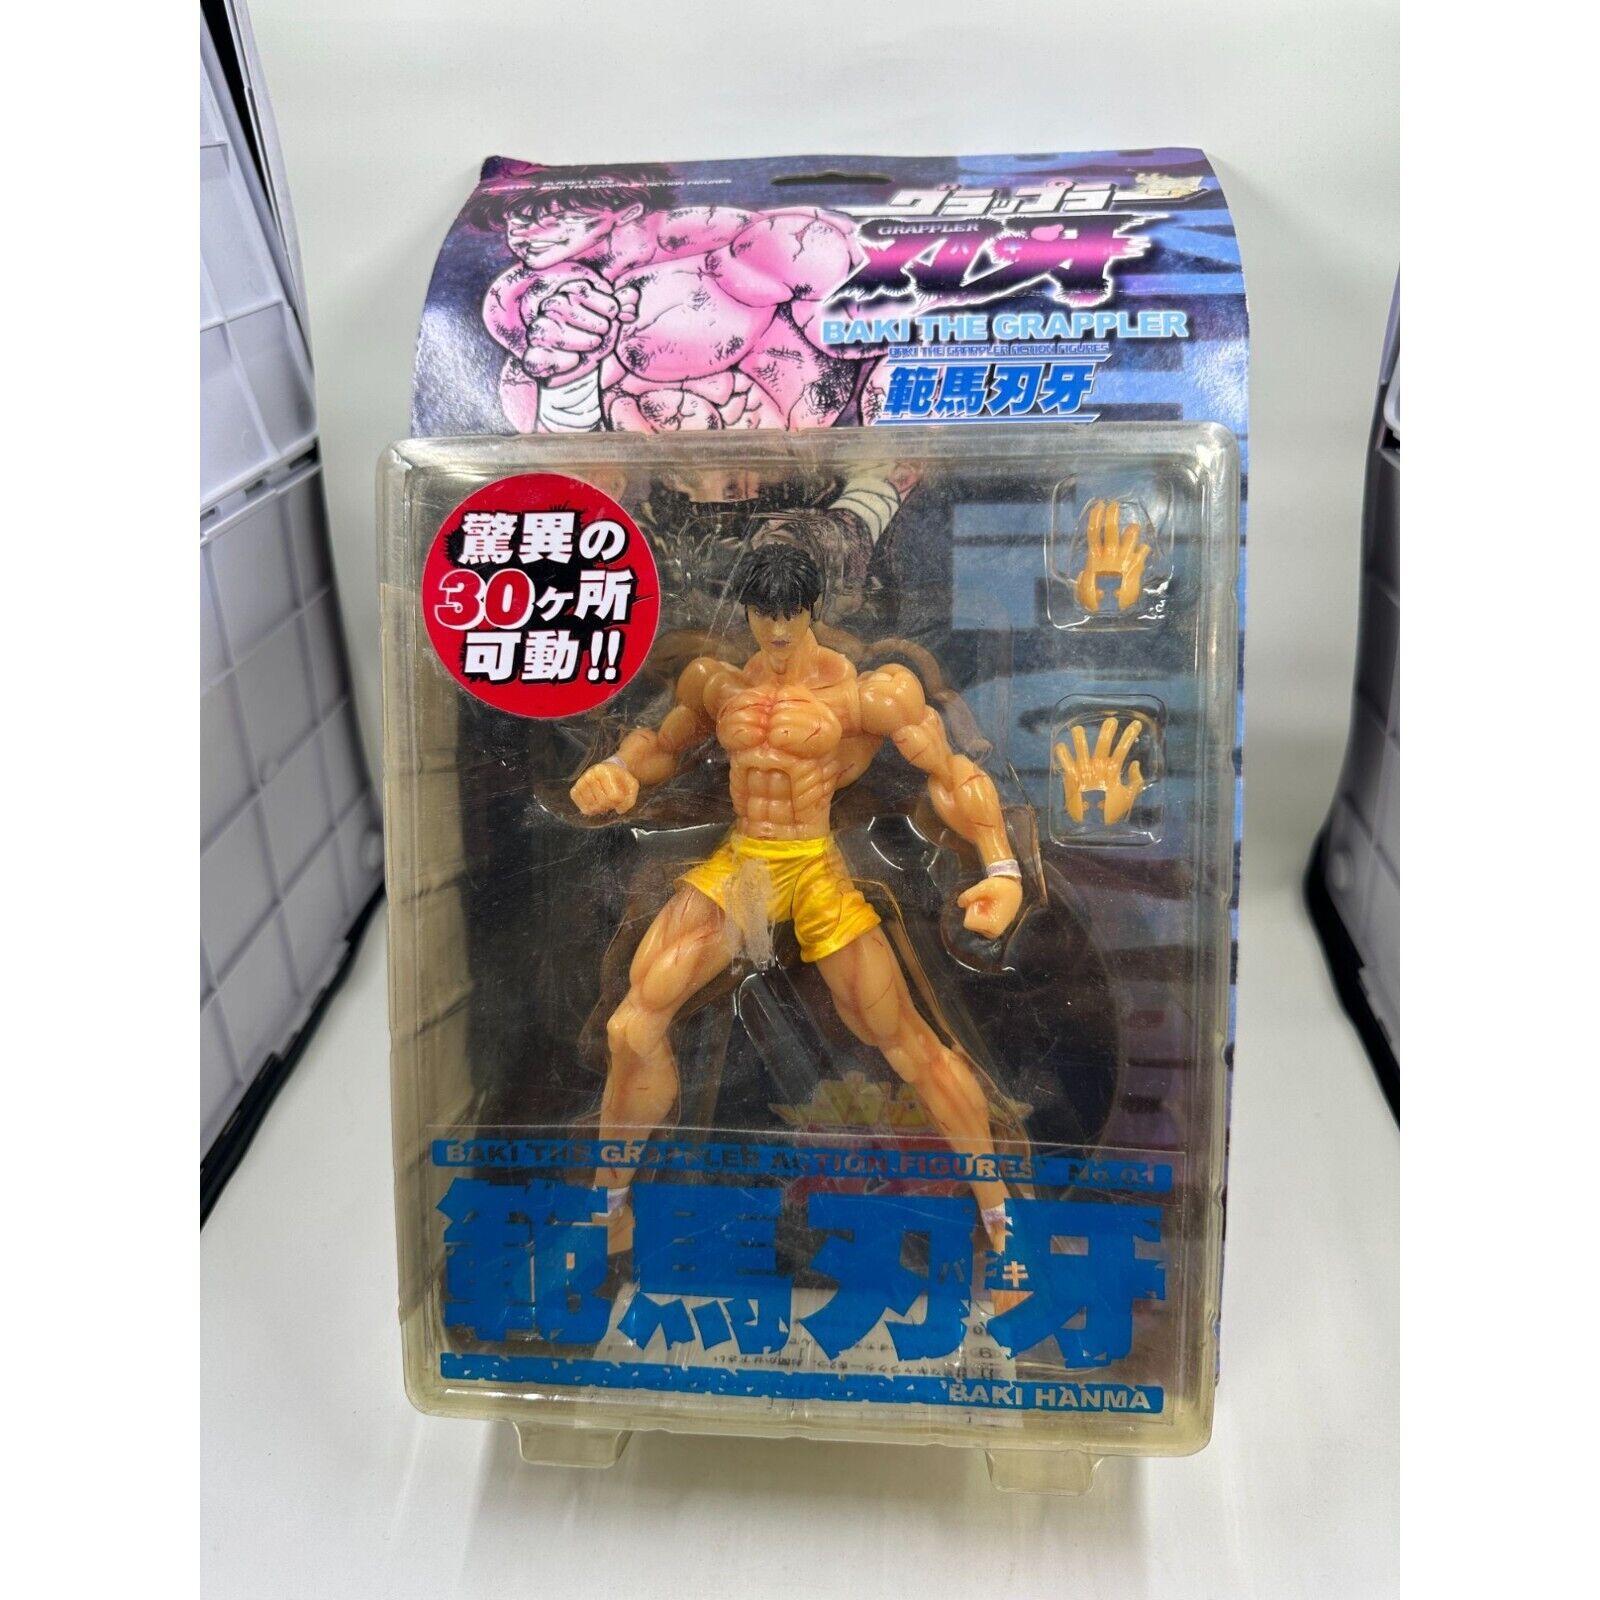 Baki Hanma Action Figure Baki The Grappler Planet Toys Japan Import New Sealed